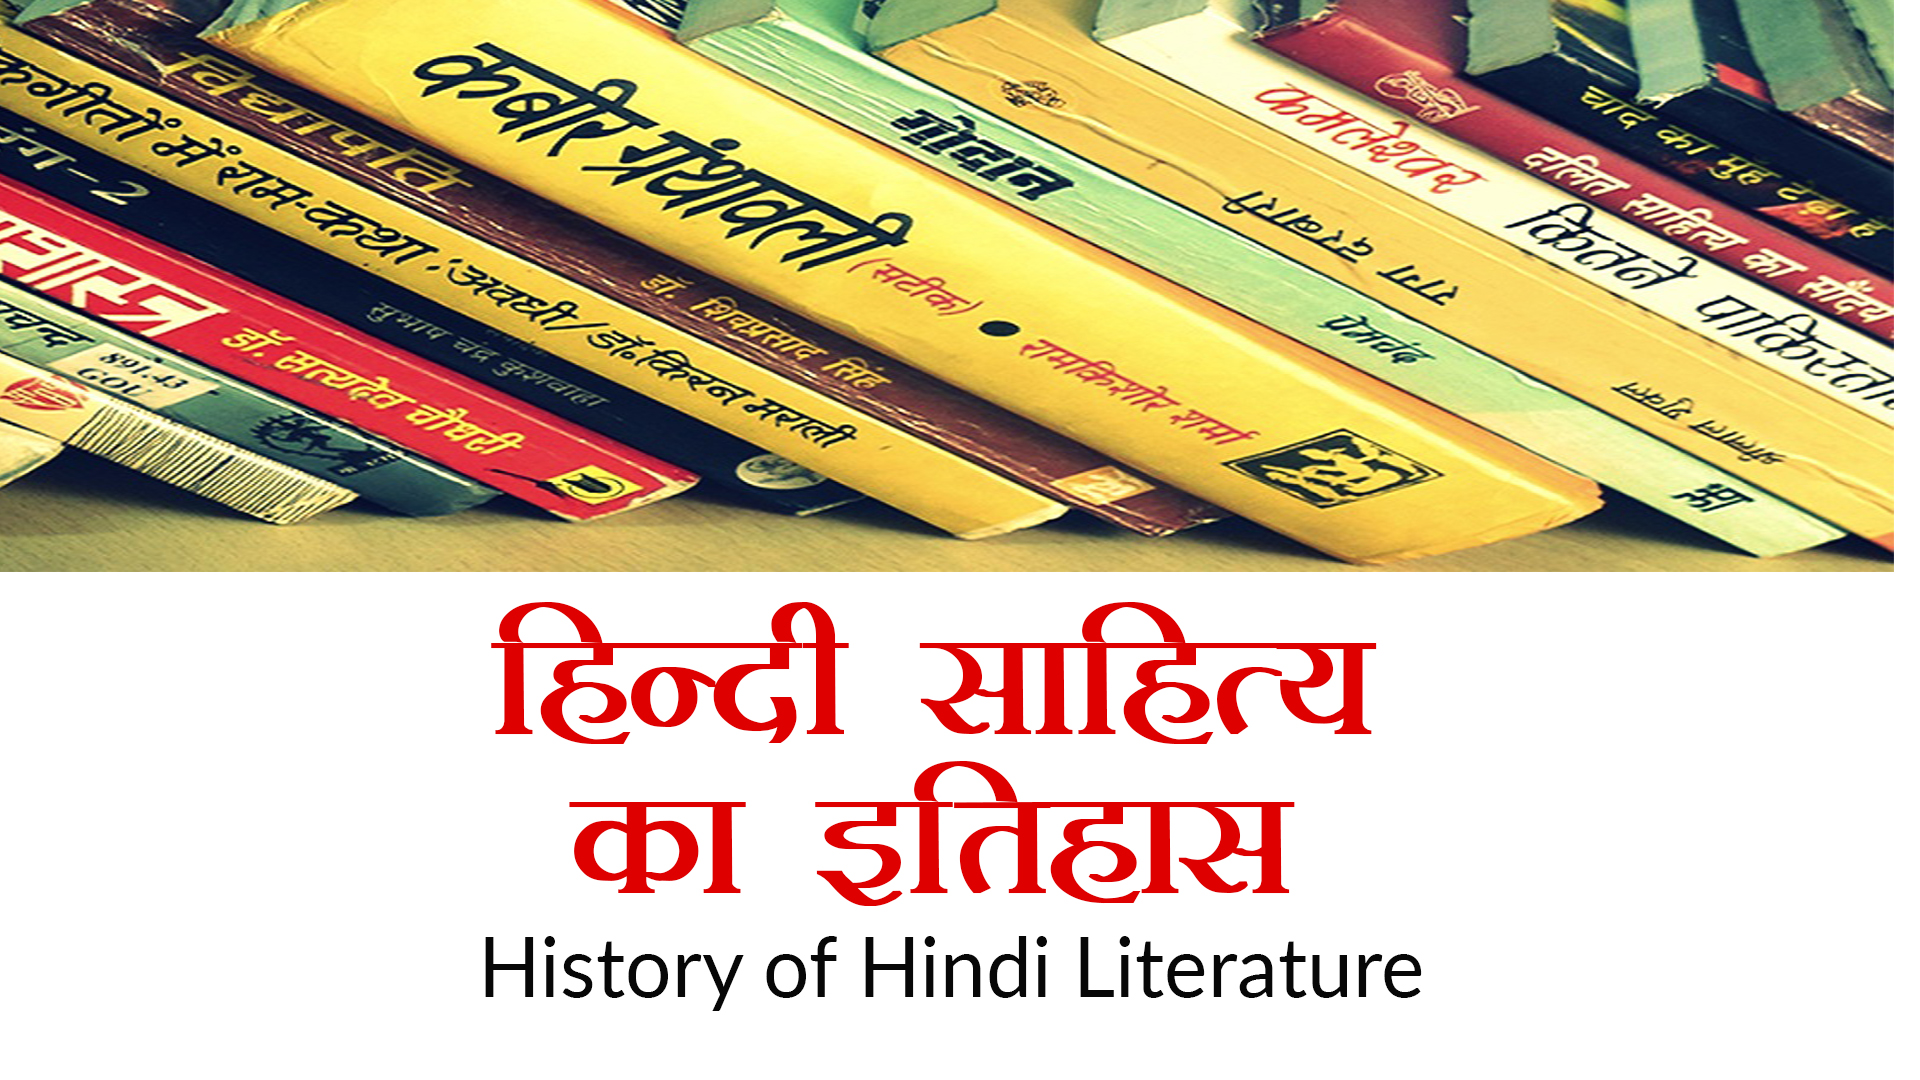 new research topics in hindi literature'